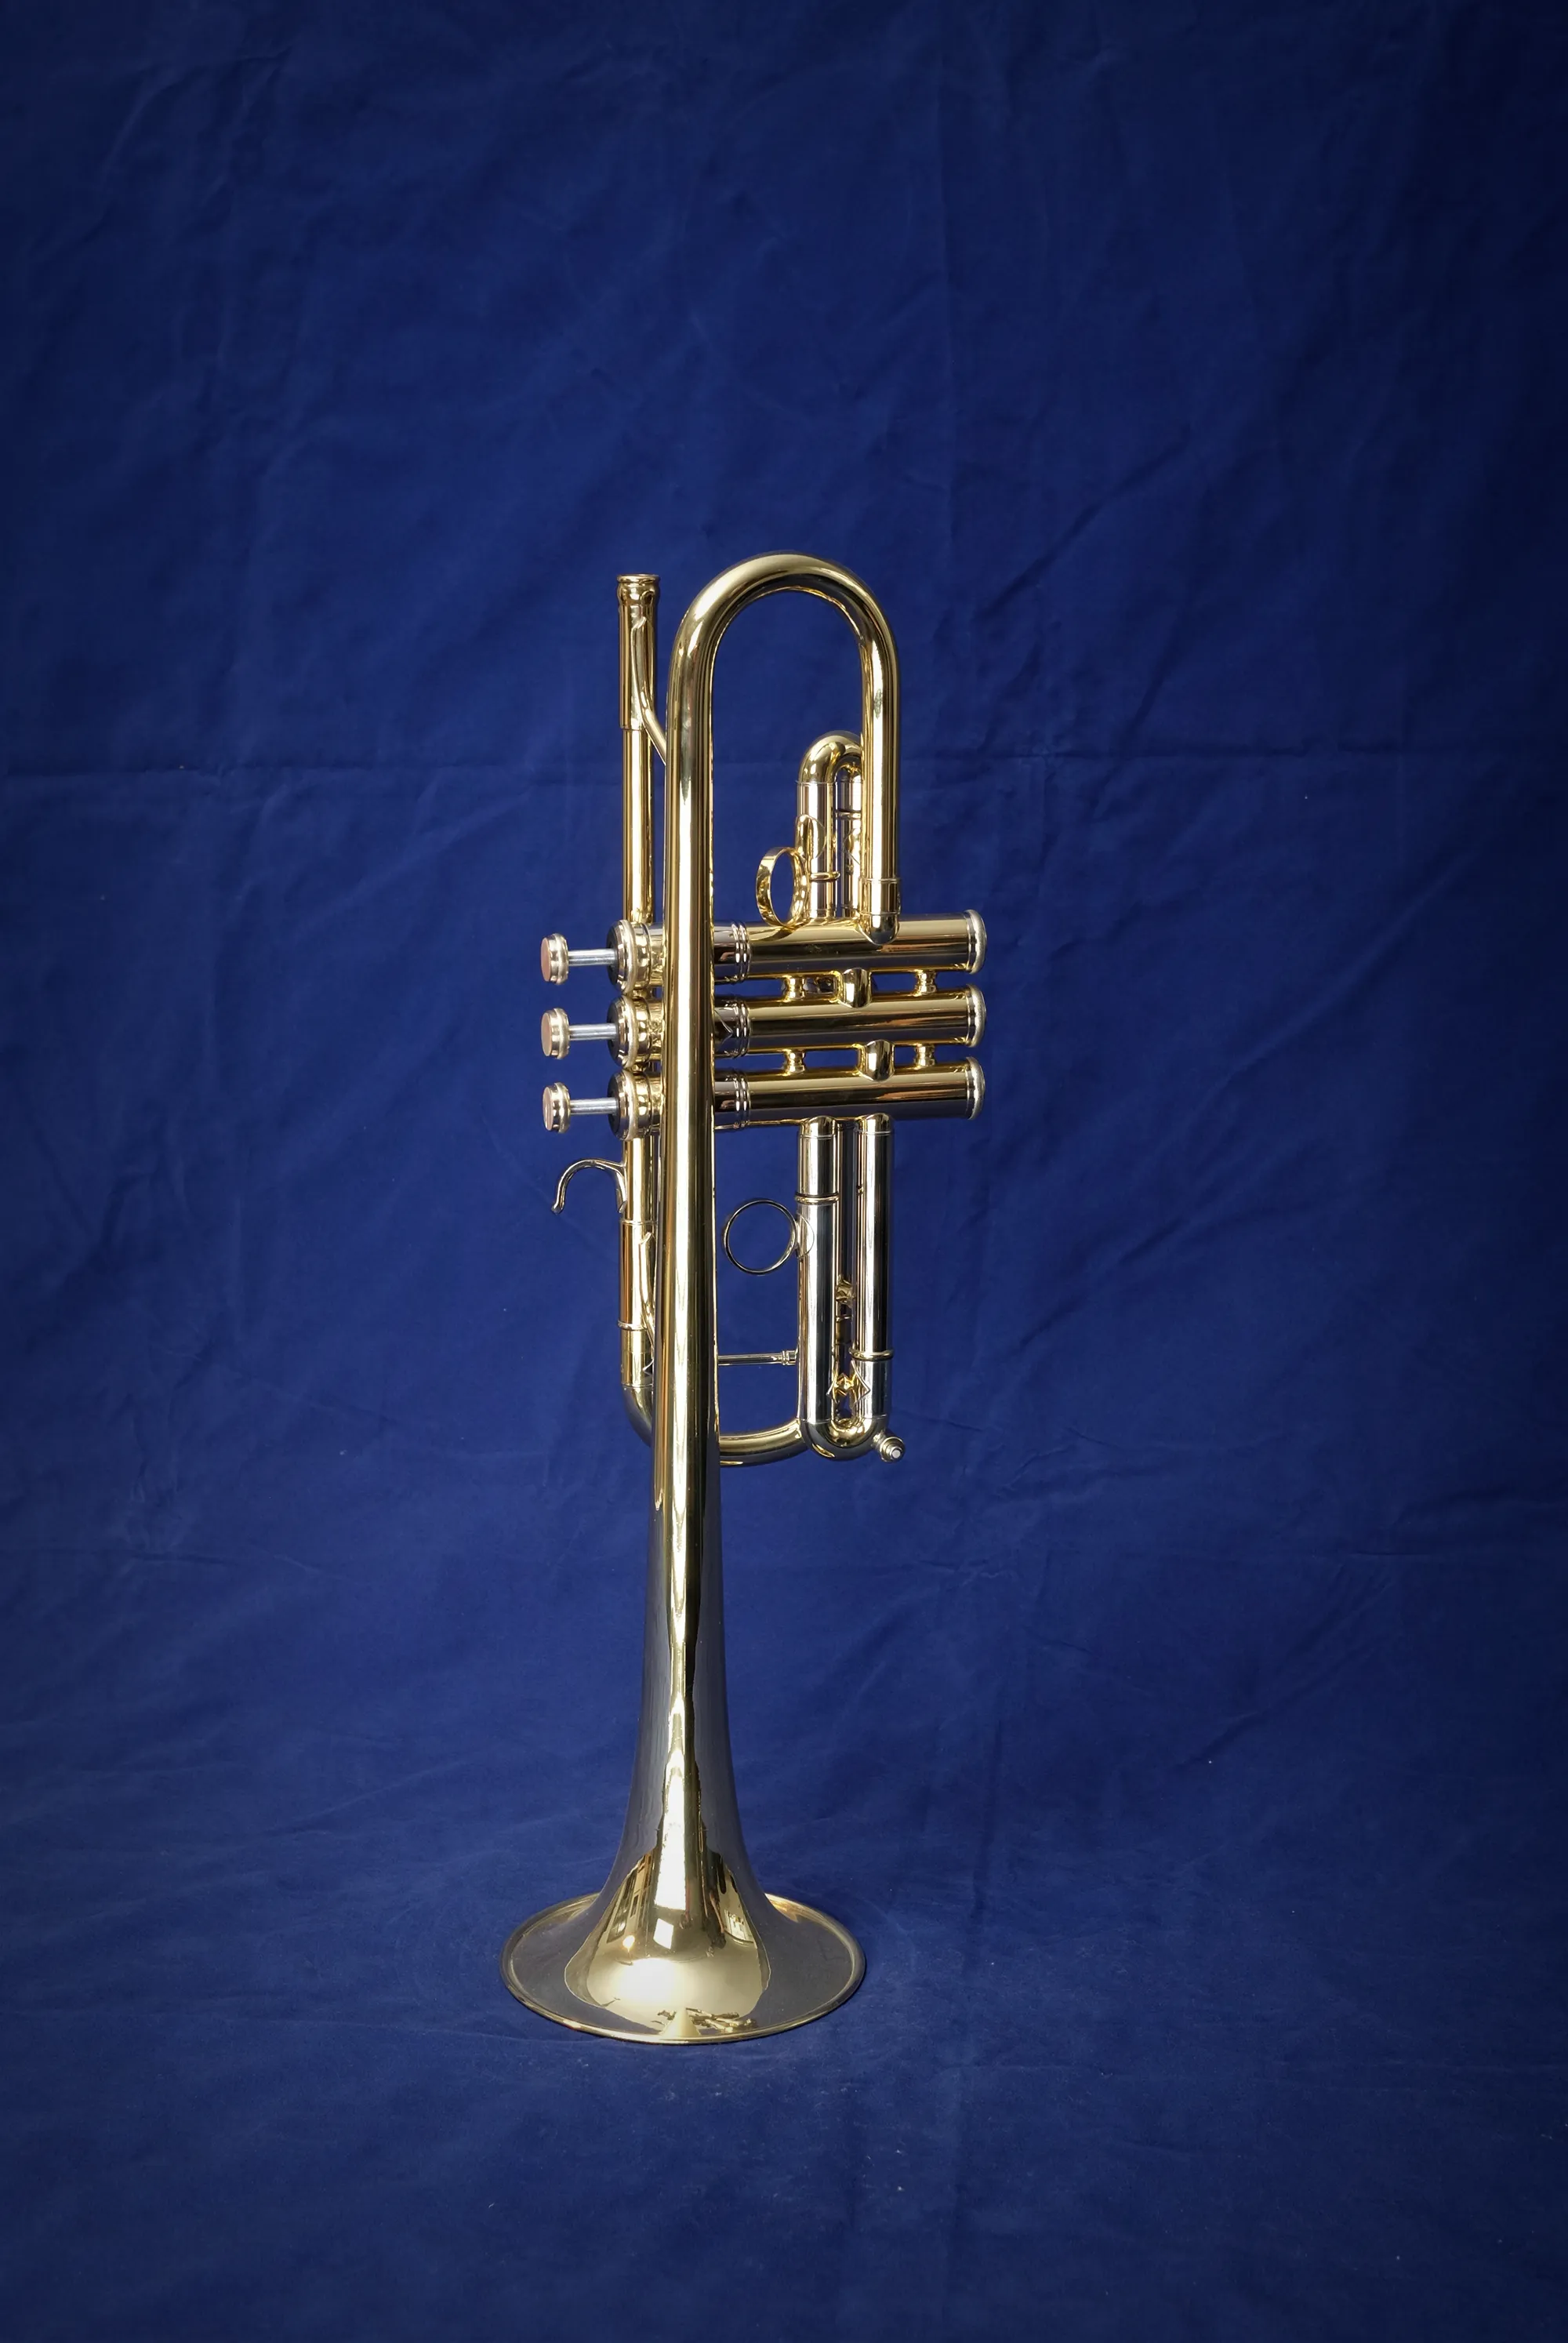 C-trumpet mod. 310